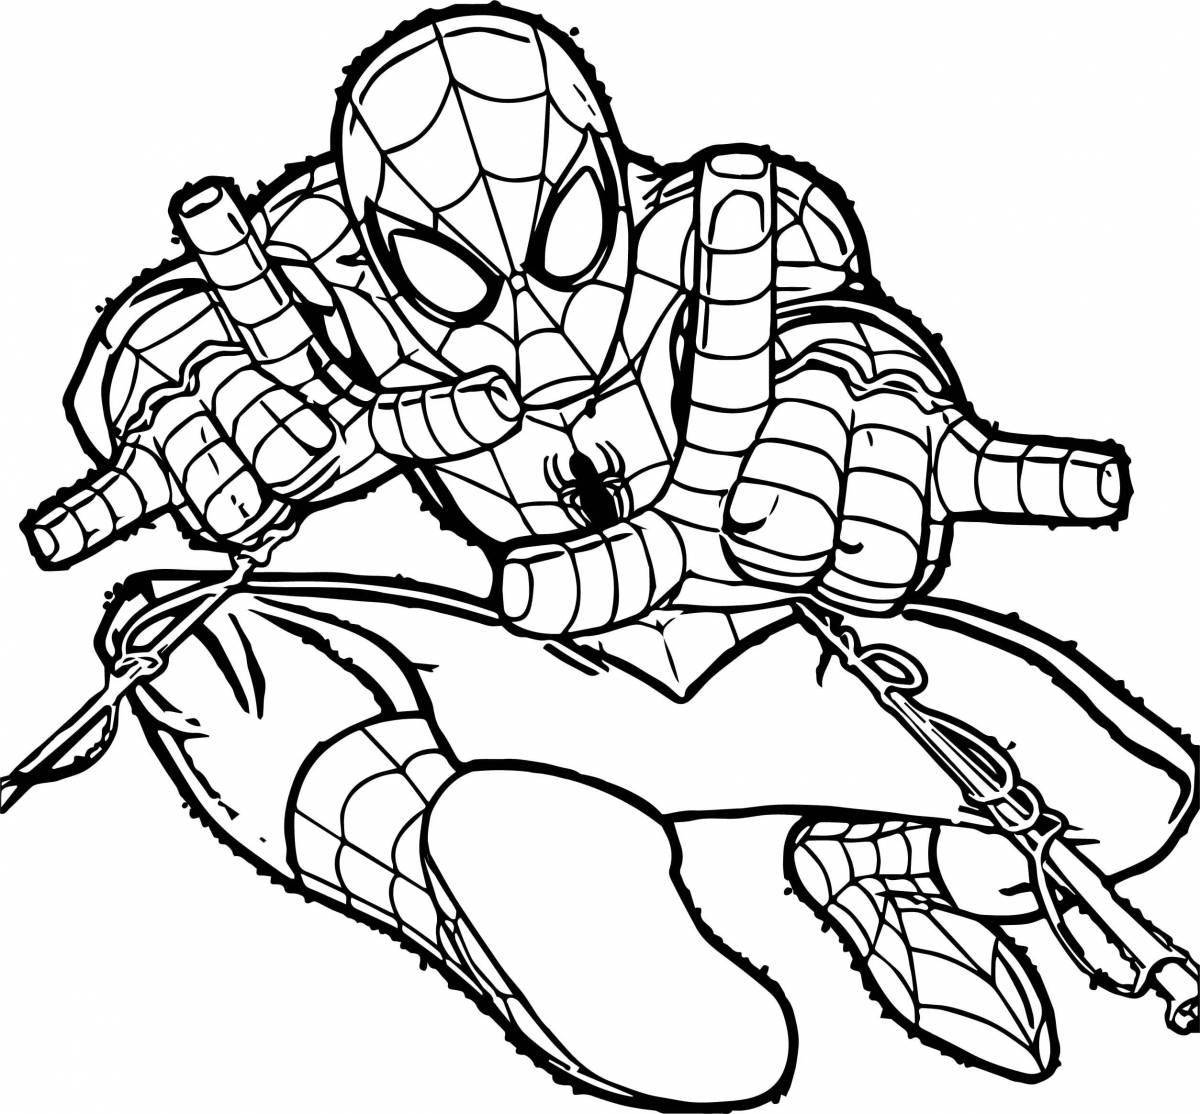 Spider-man fun coloring book